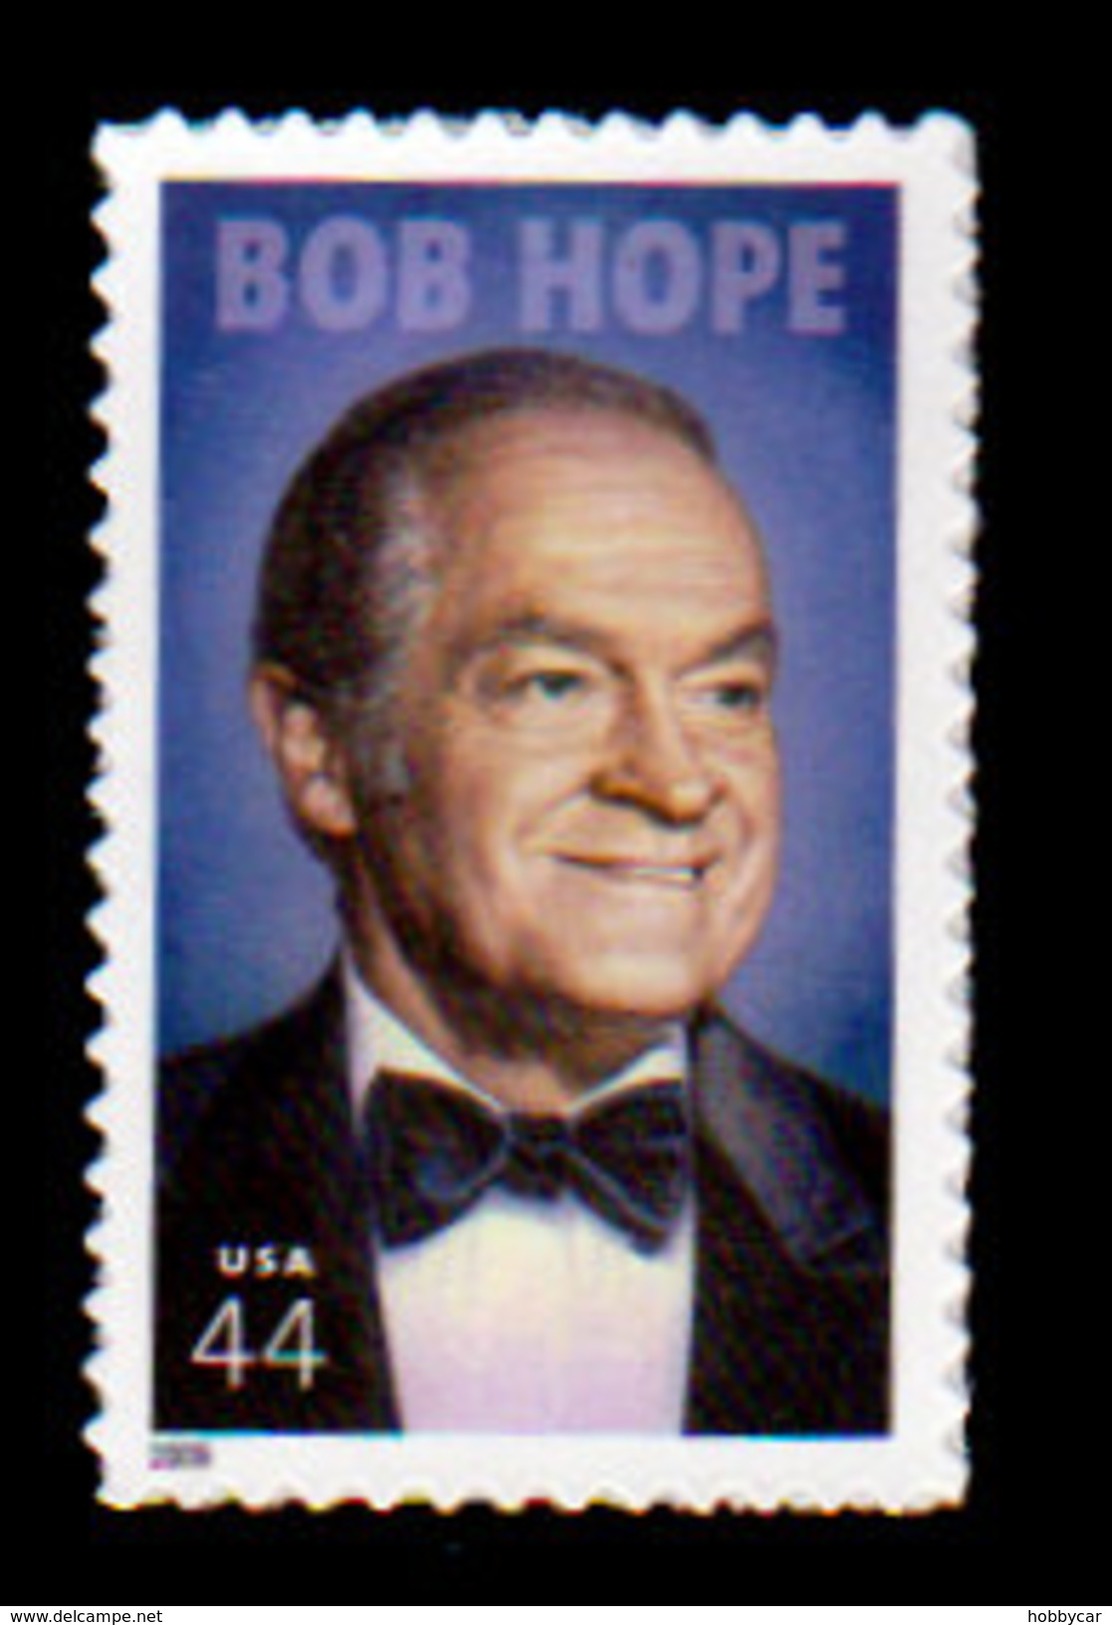 USA, 2009, Scott #4406, Bob Hope, MNH, VF - Unused Stamps